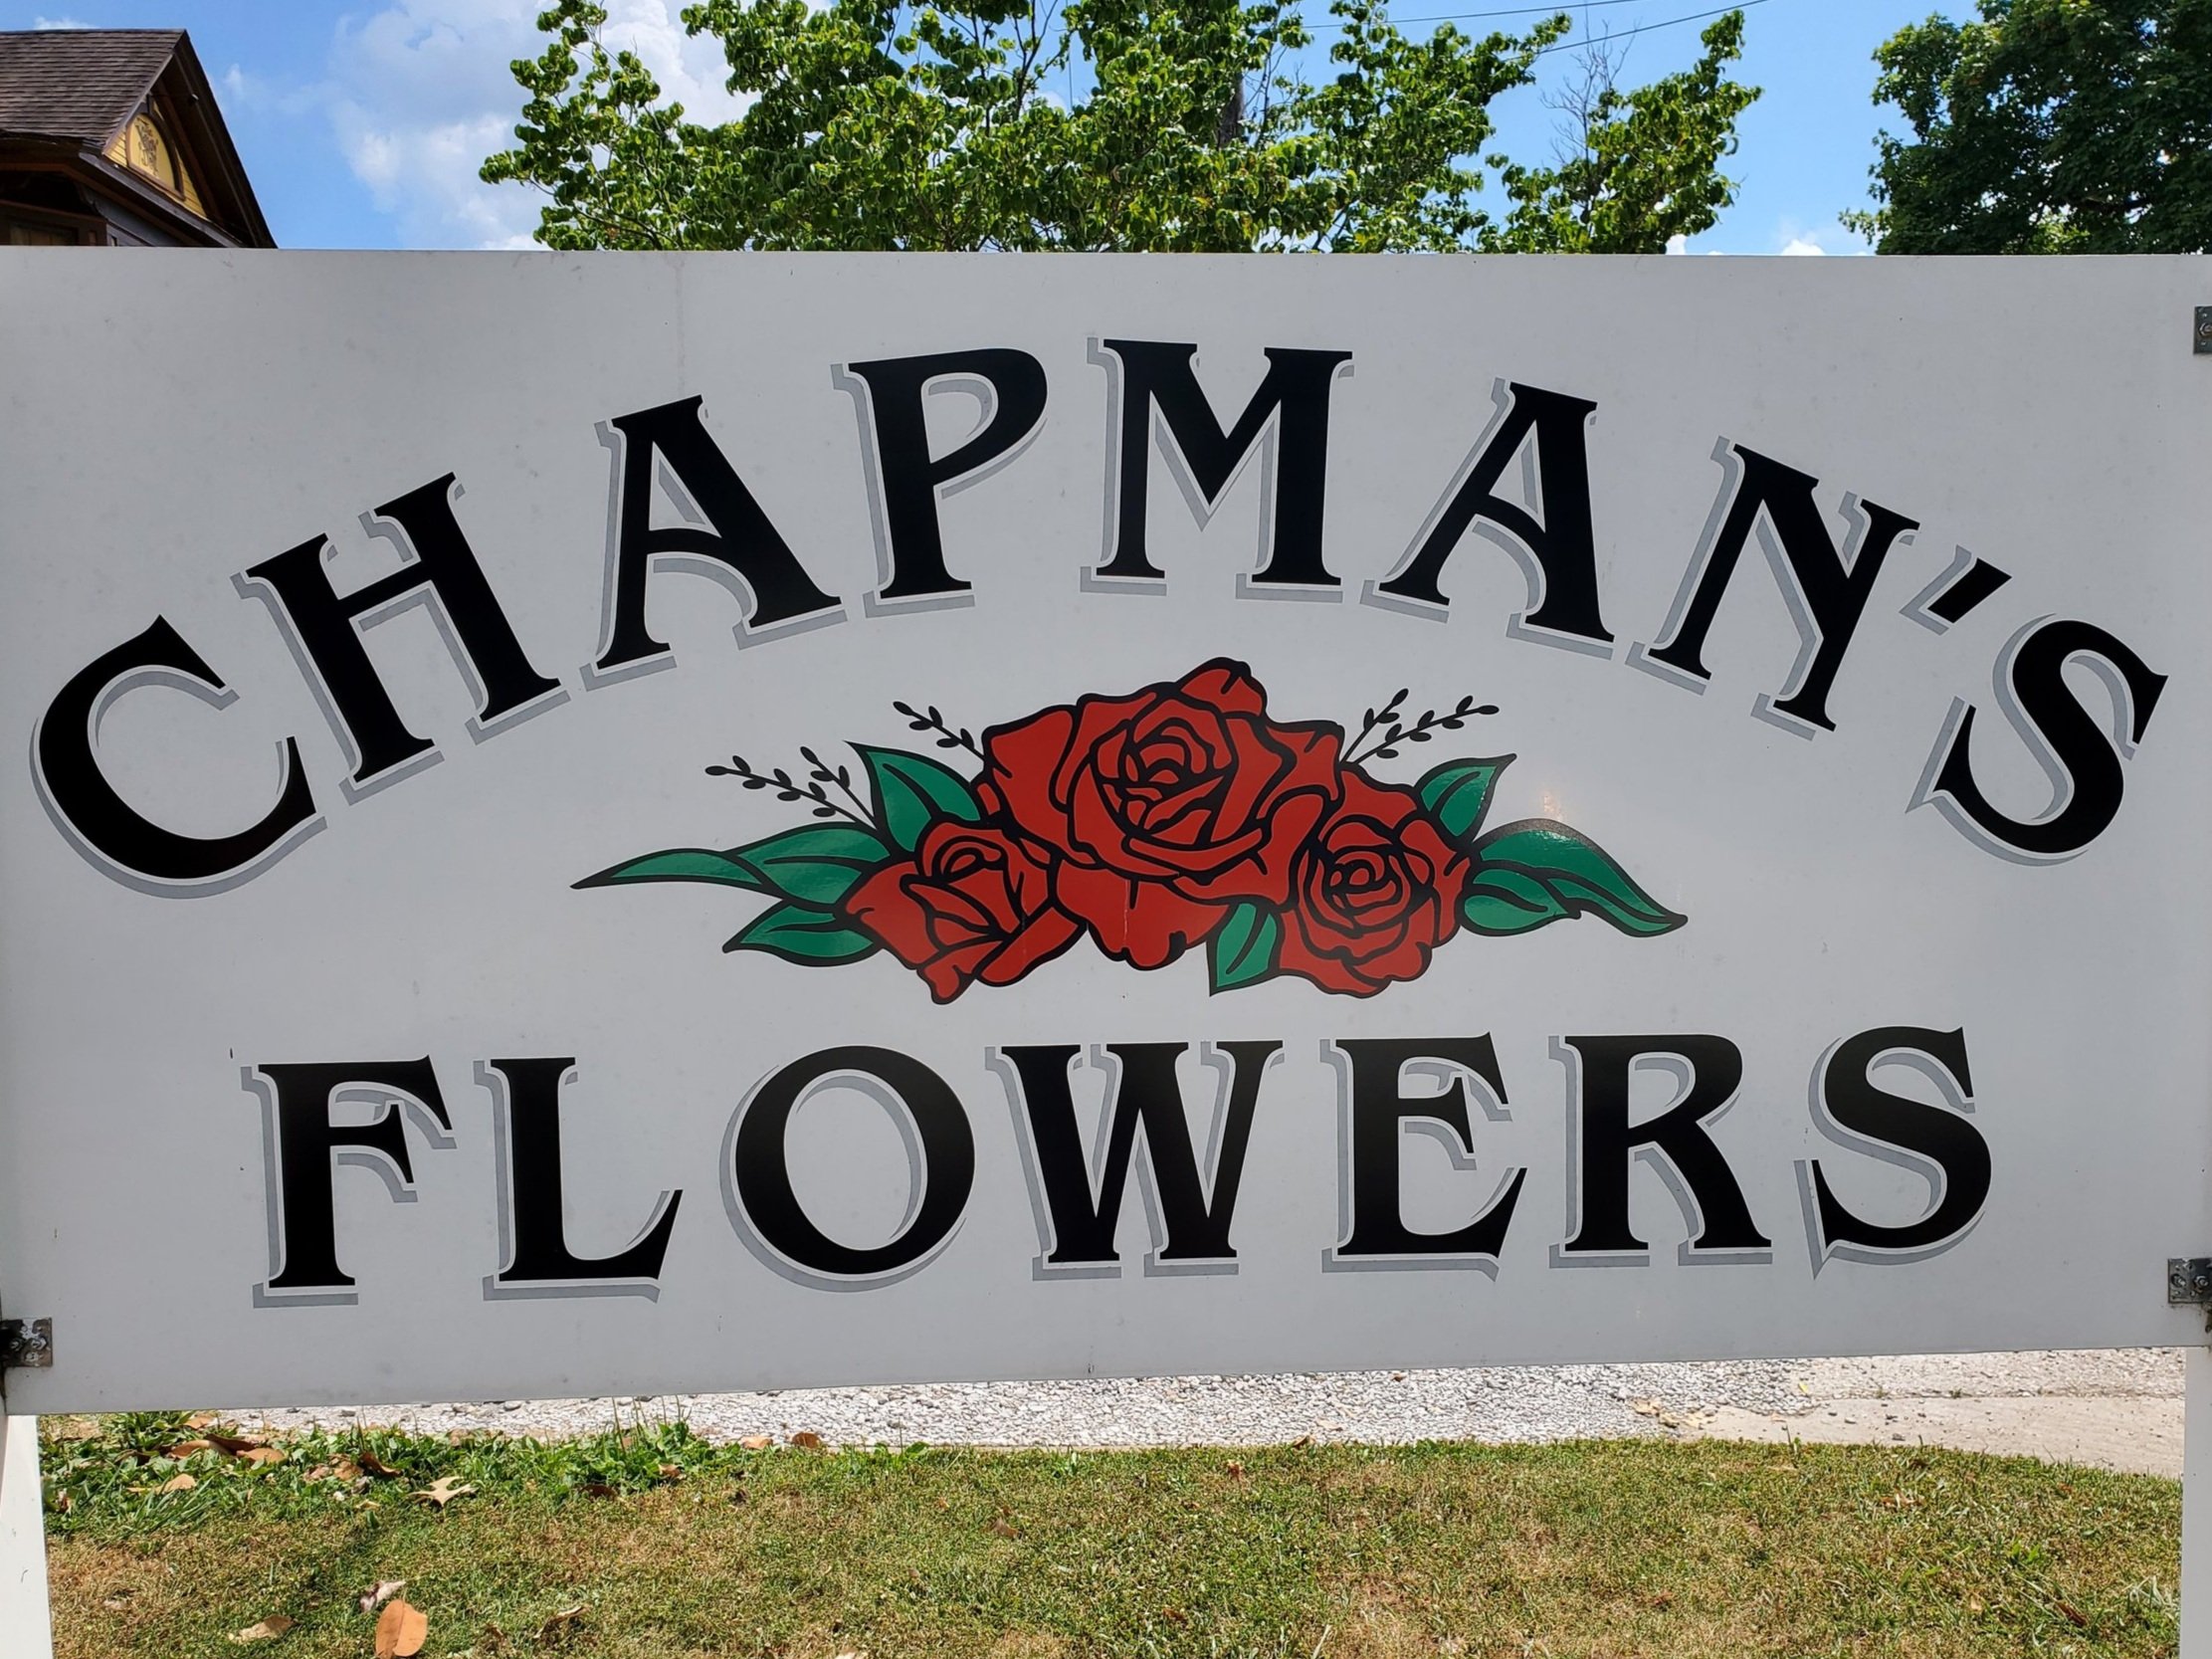 Personalized Serving Utensils — Chapmans Flowers 931-363-1542